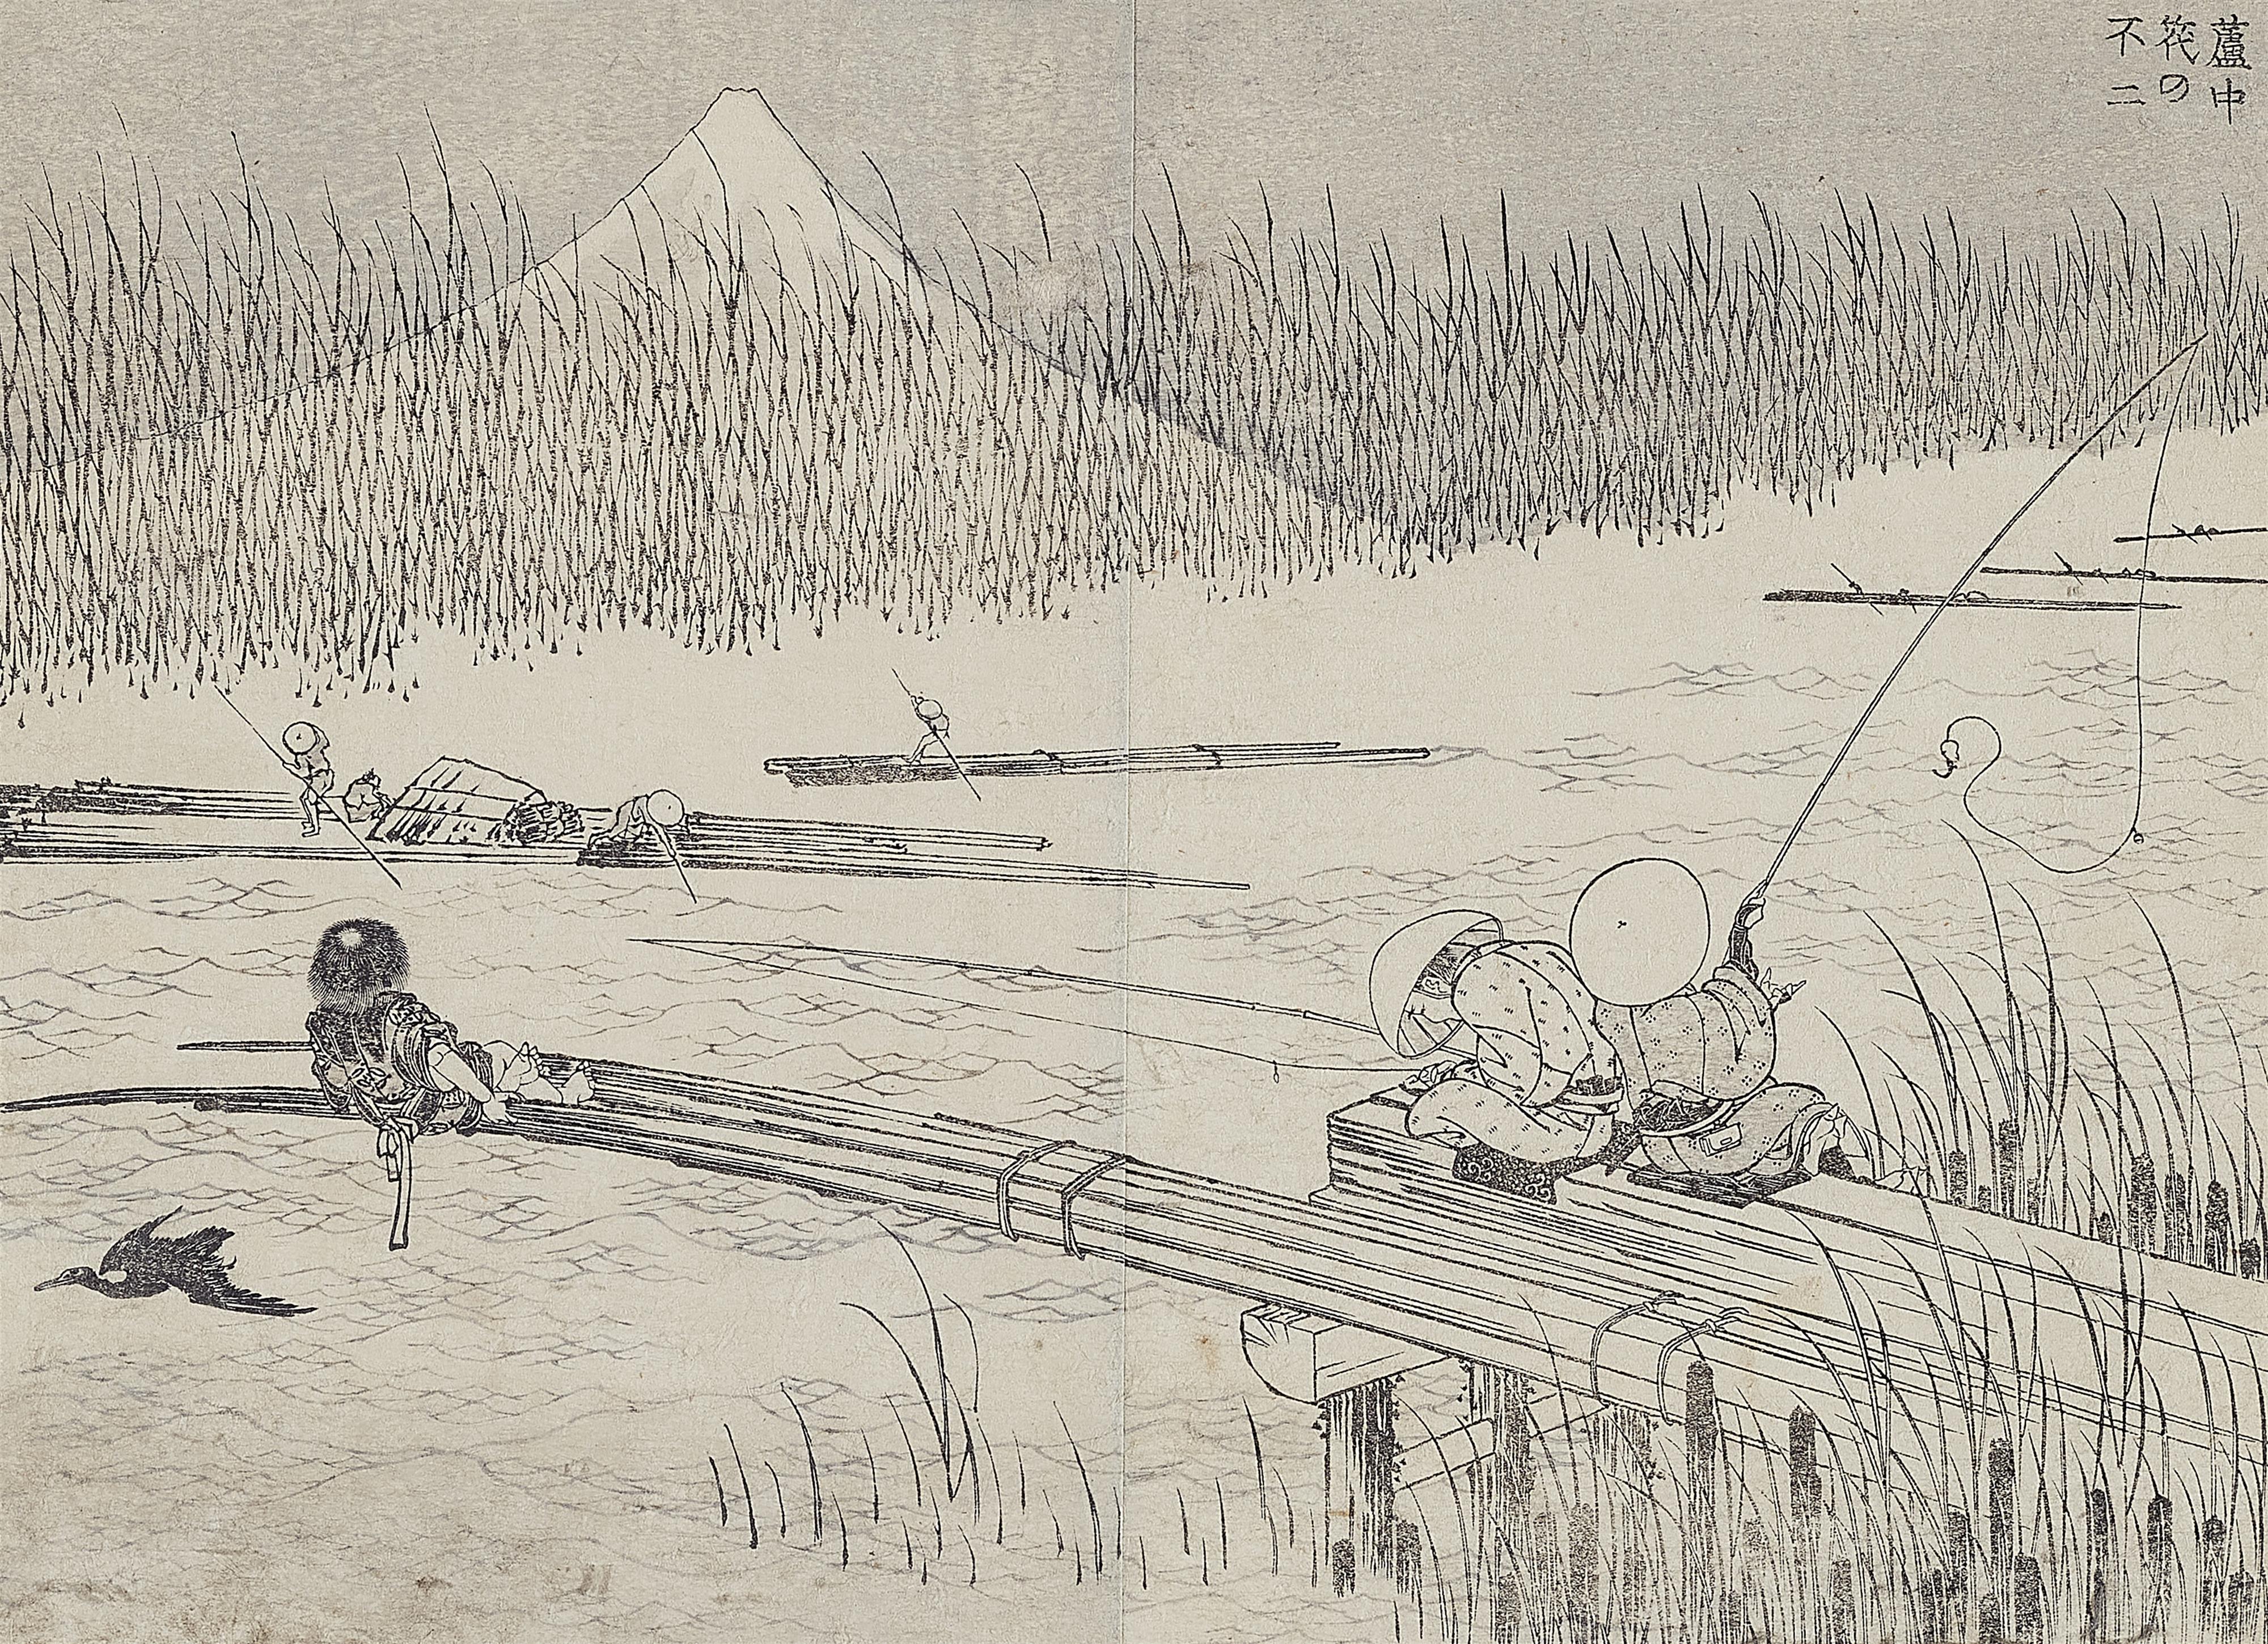 Katsushika Hokusai - Black and white illustrations from the album Fugaku hyakkei - image-22